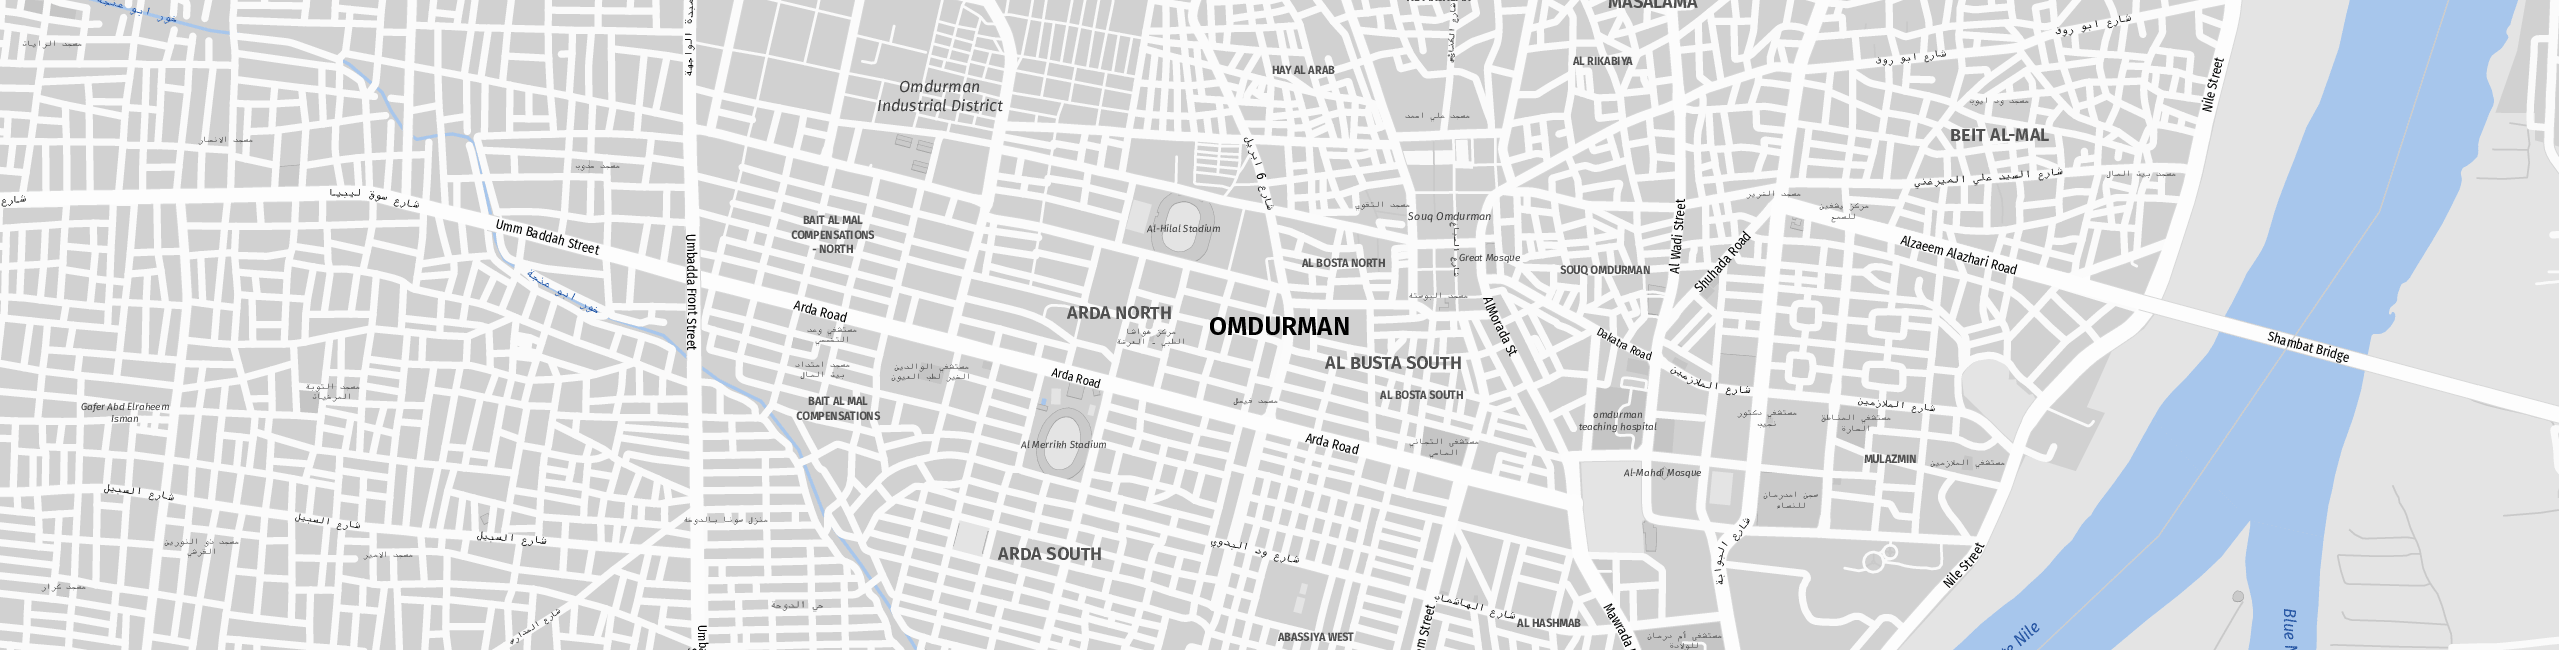 Stadtplan Omdurman zum Downloaden.